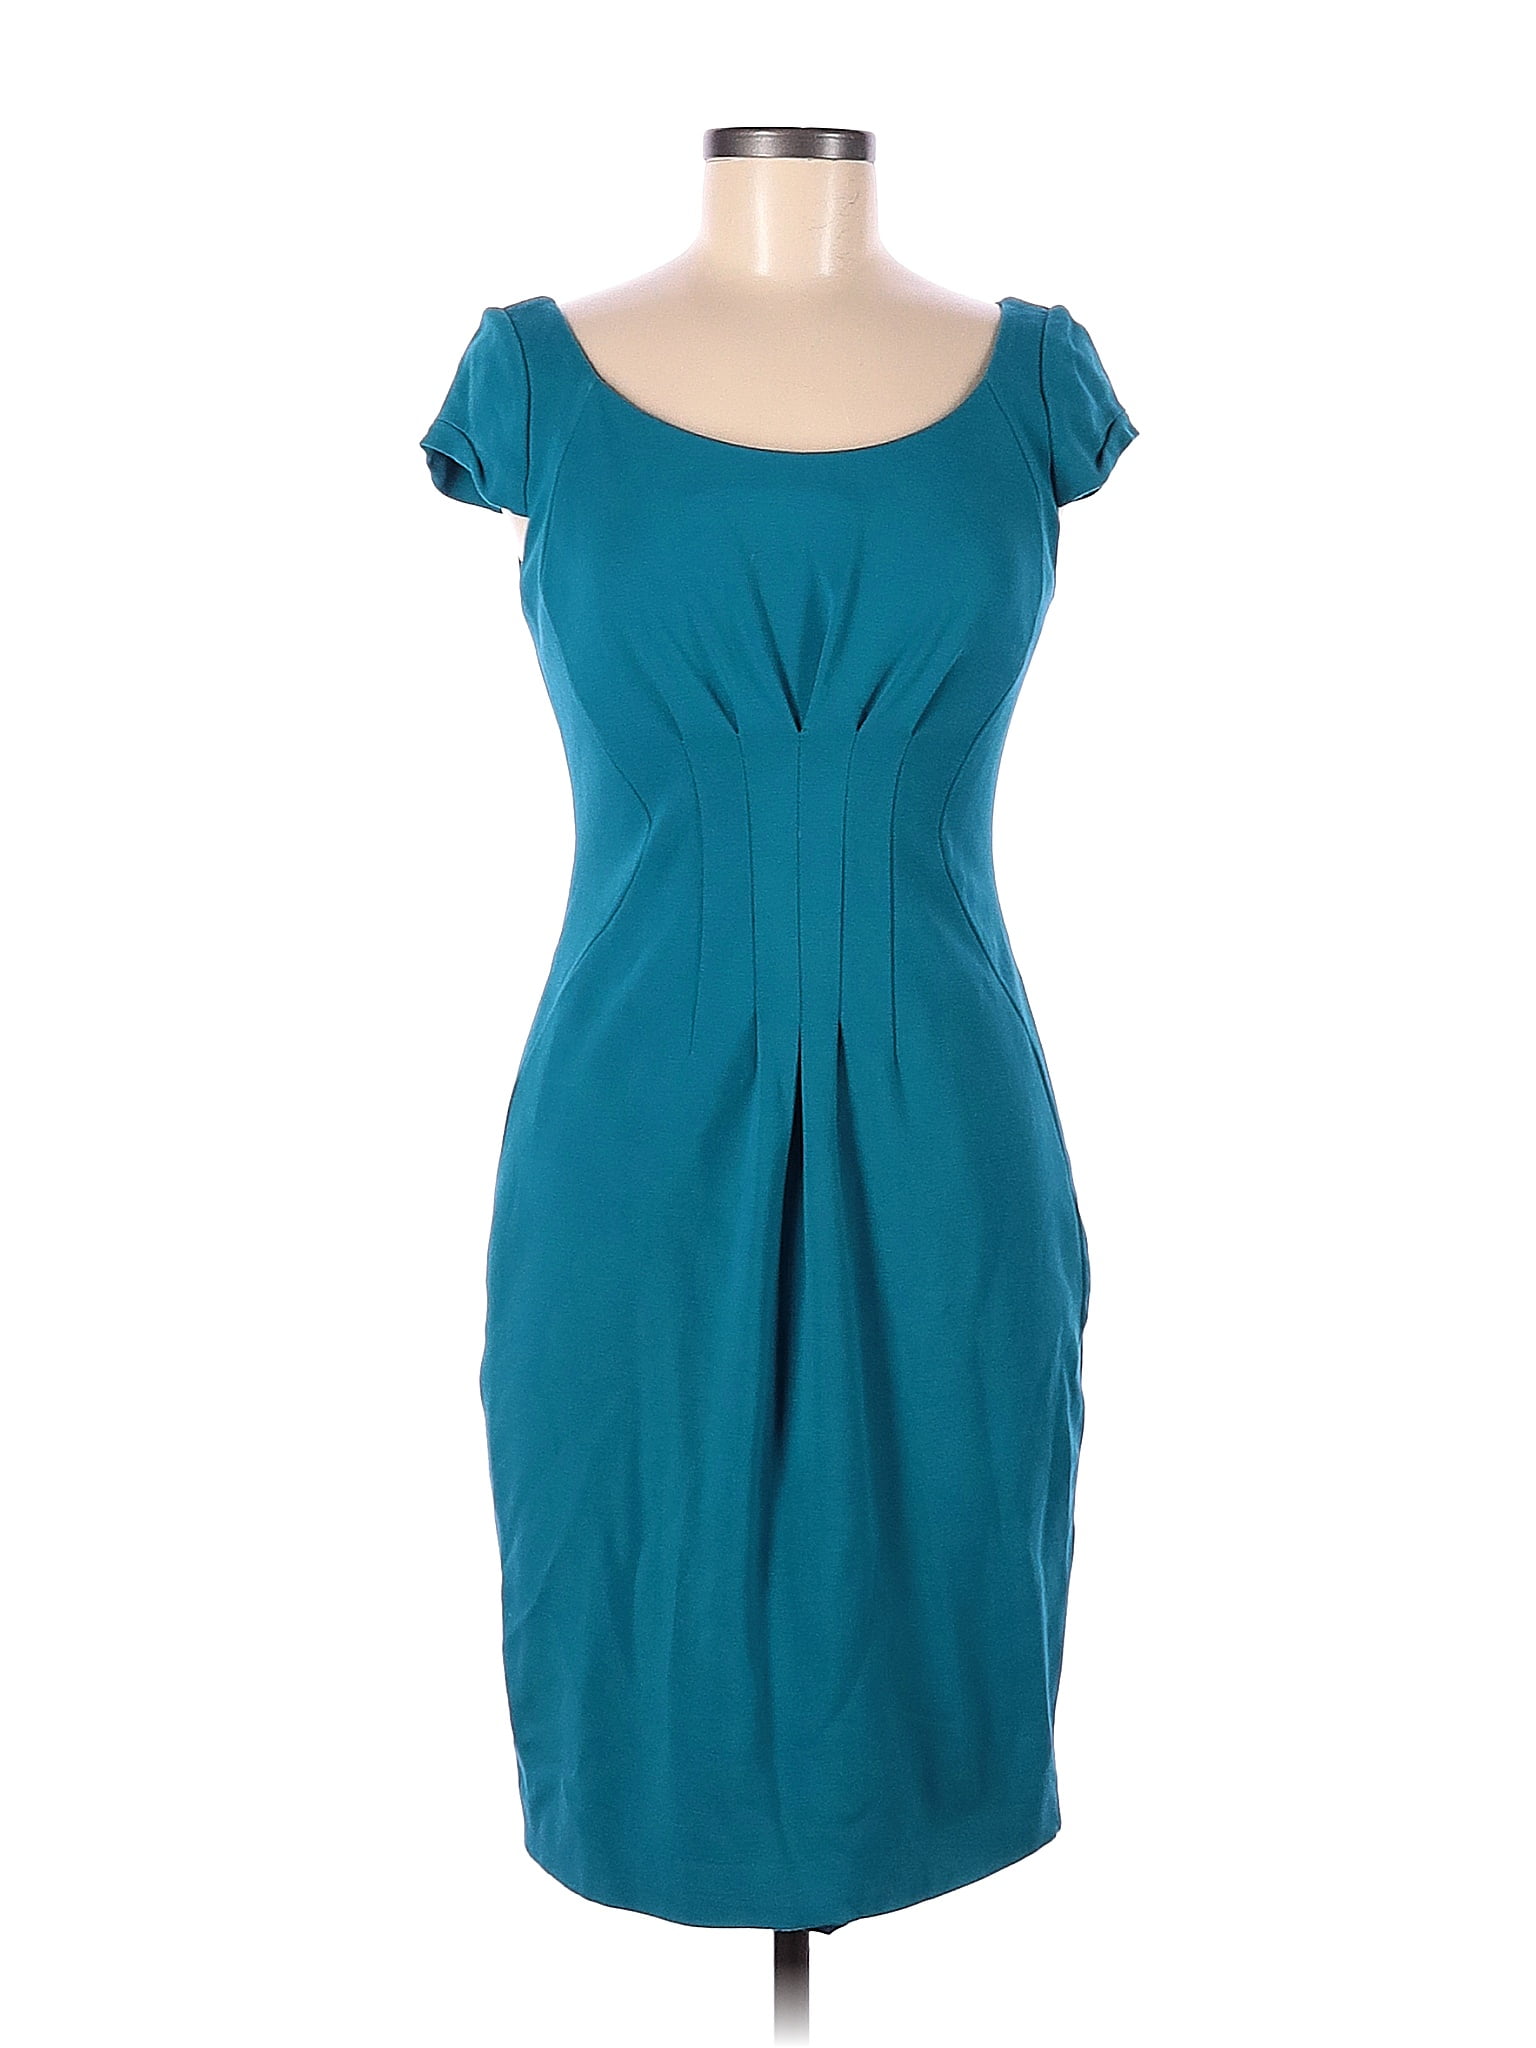 Elie Tahari Solid Teal Blue Casual Dress Size 8 - 84% off | thredUP